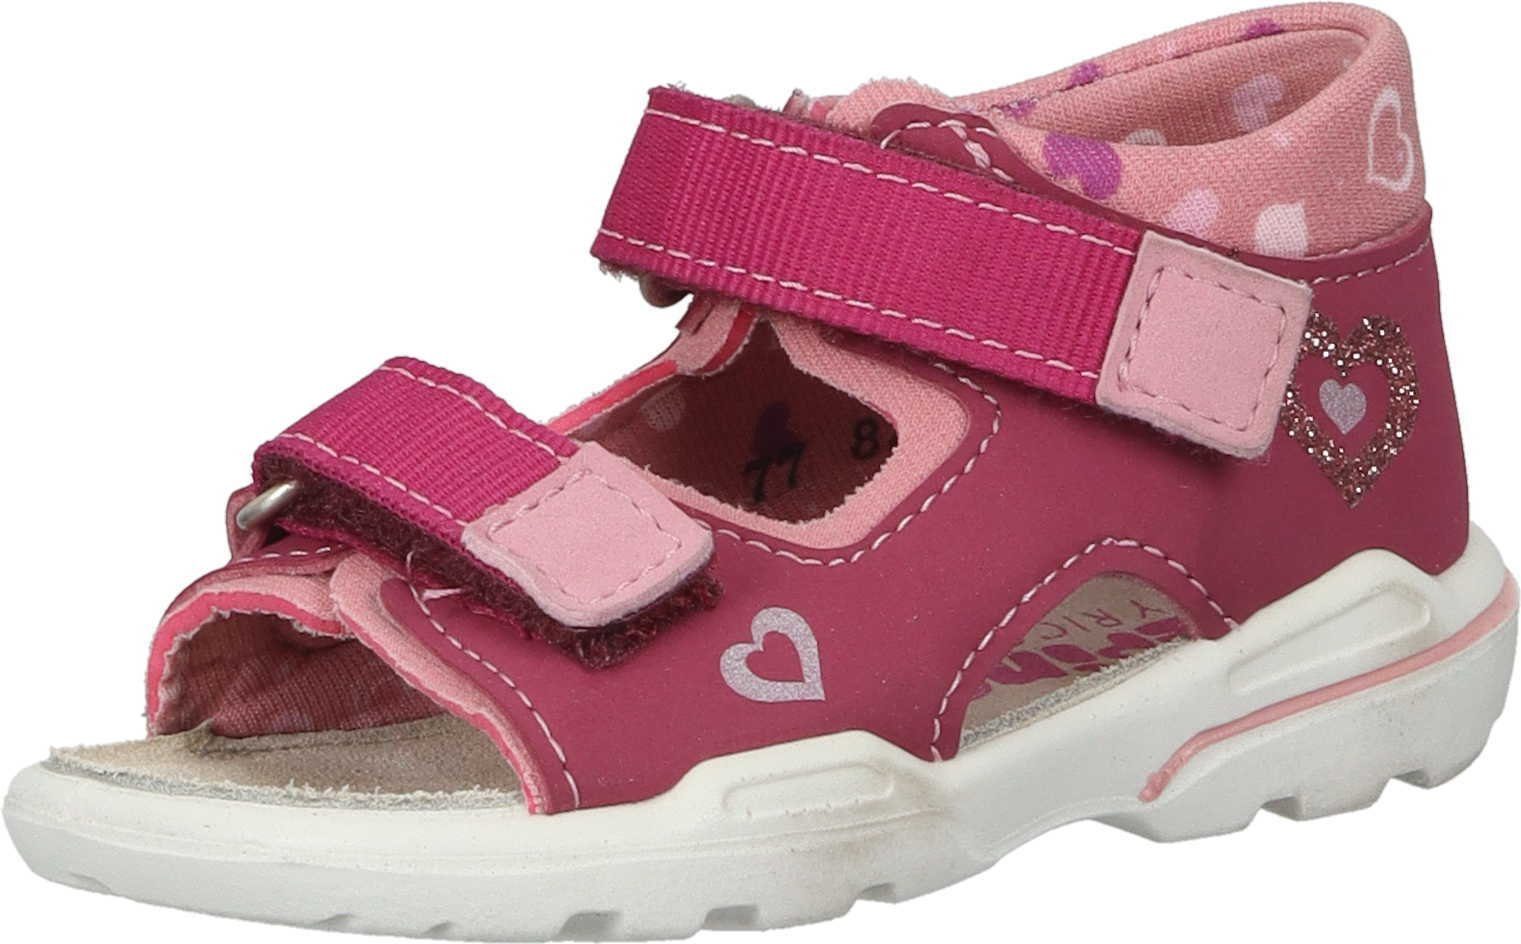 Sandaletten Pepino Synthetik/Textil aus pink Outdoorsandale